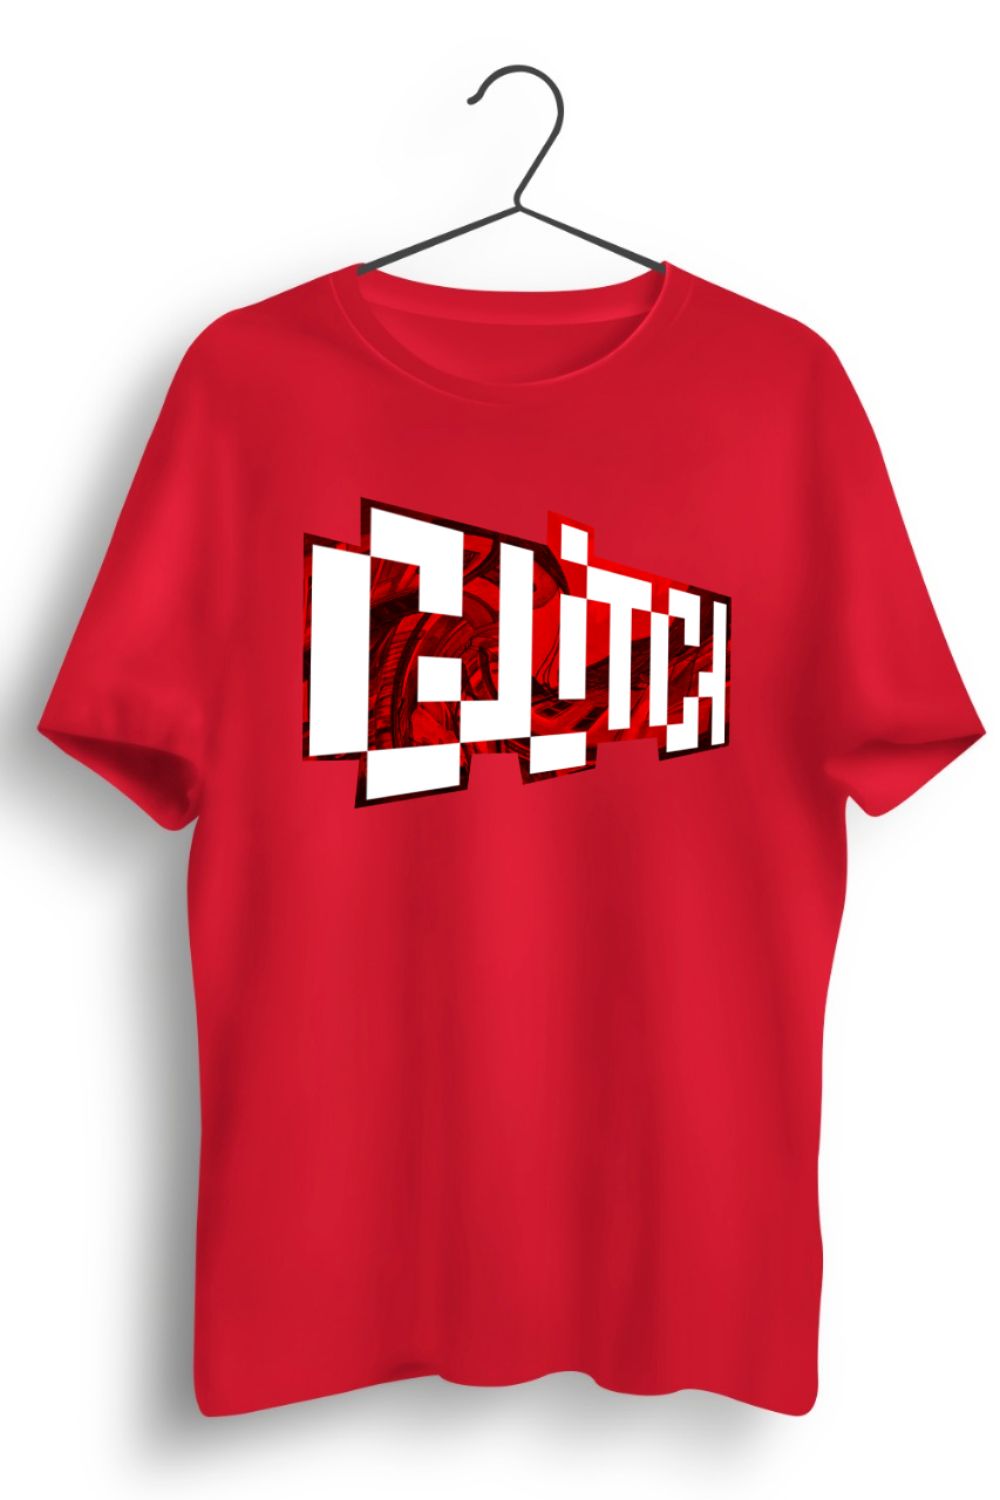 Glitch 3D Printed Graphic Red Tshirt